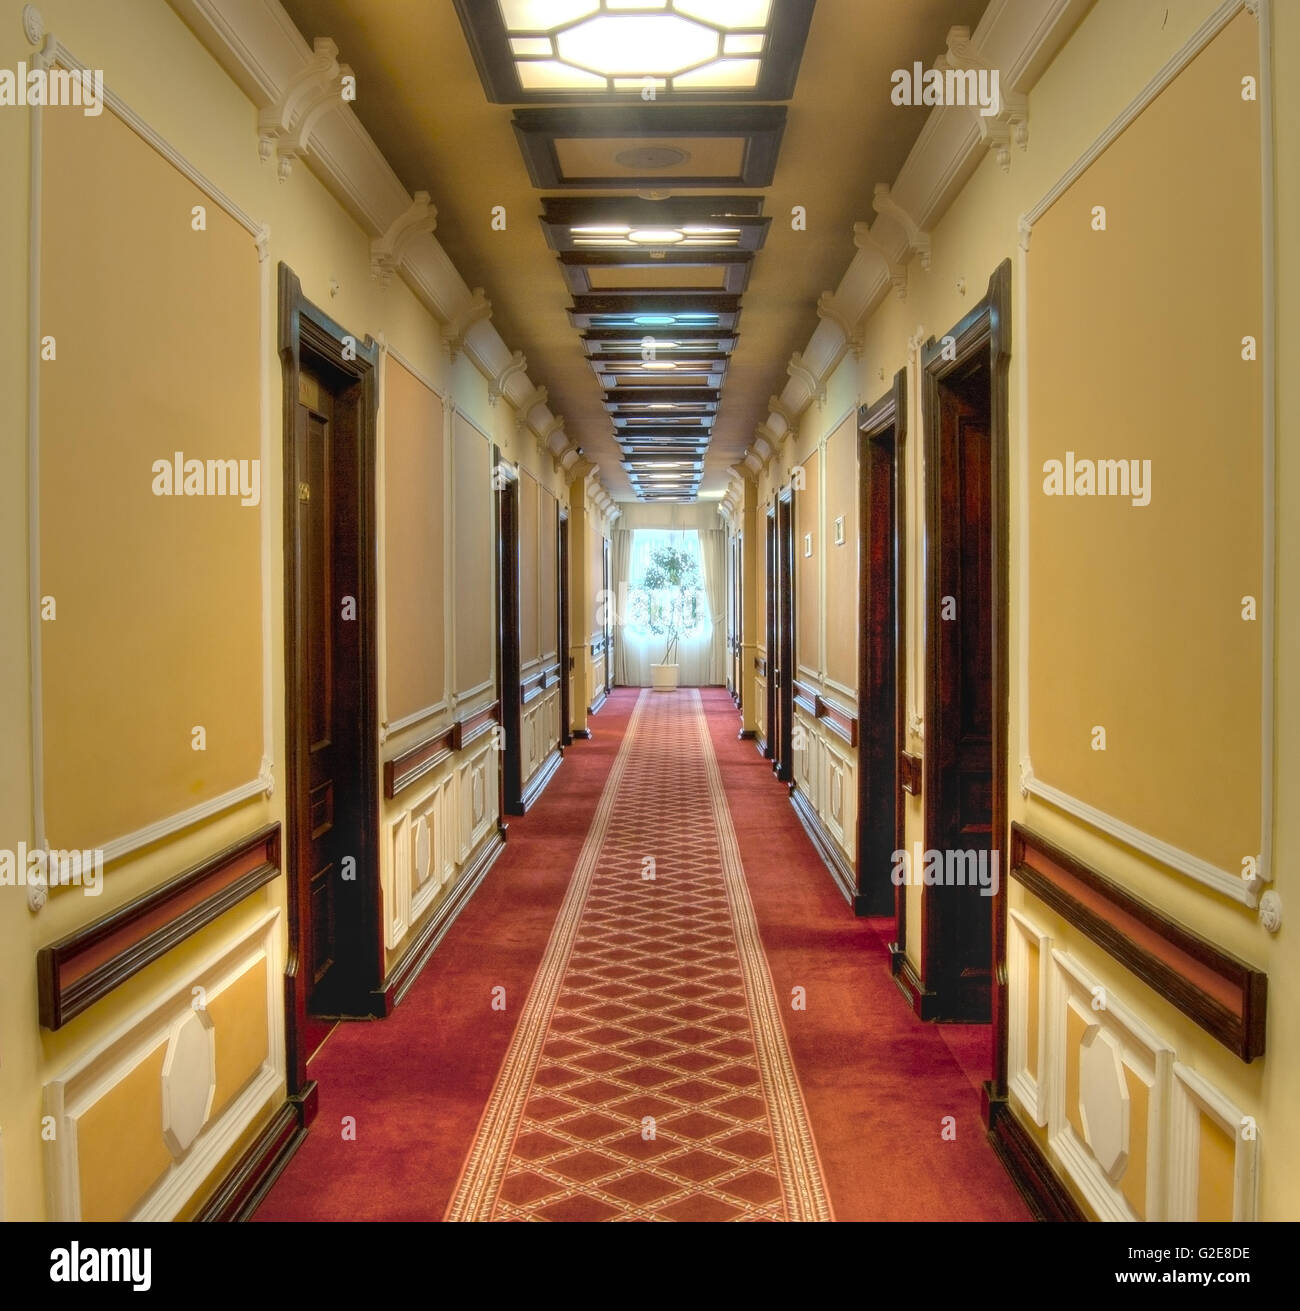 Long Hotel Hallway Stock Photo